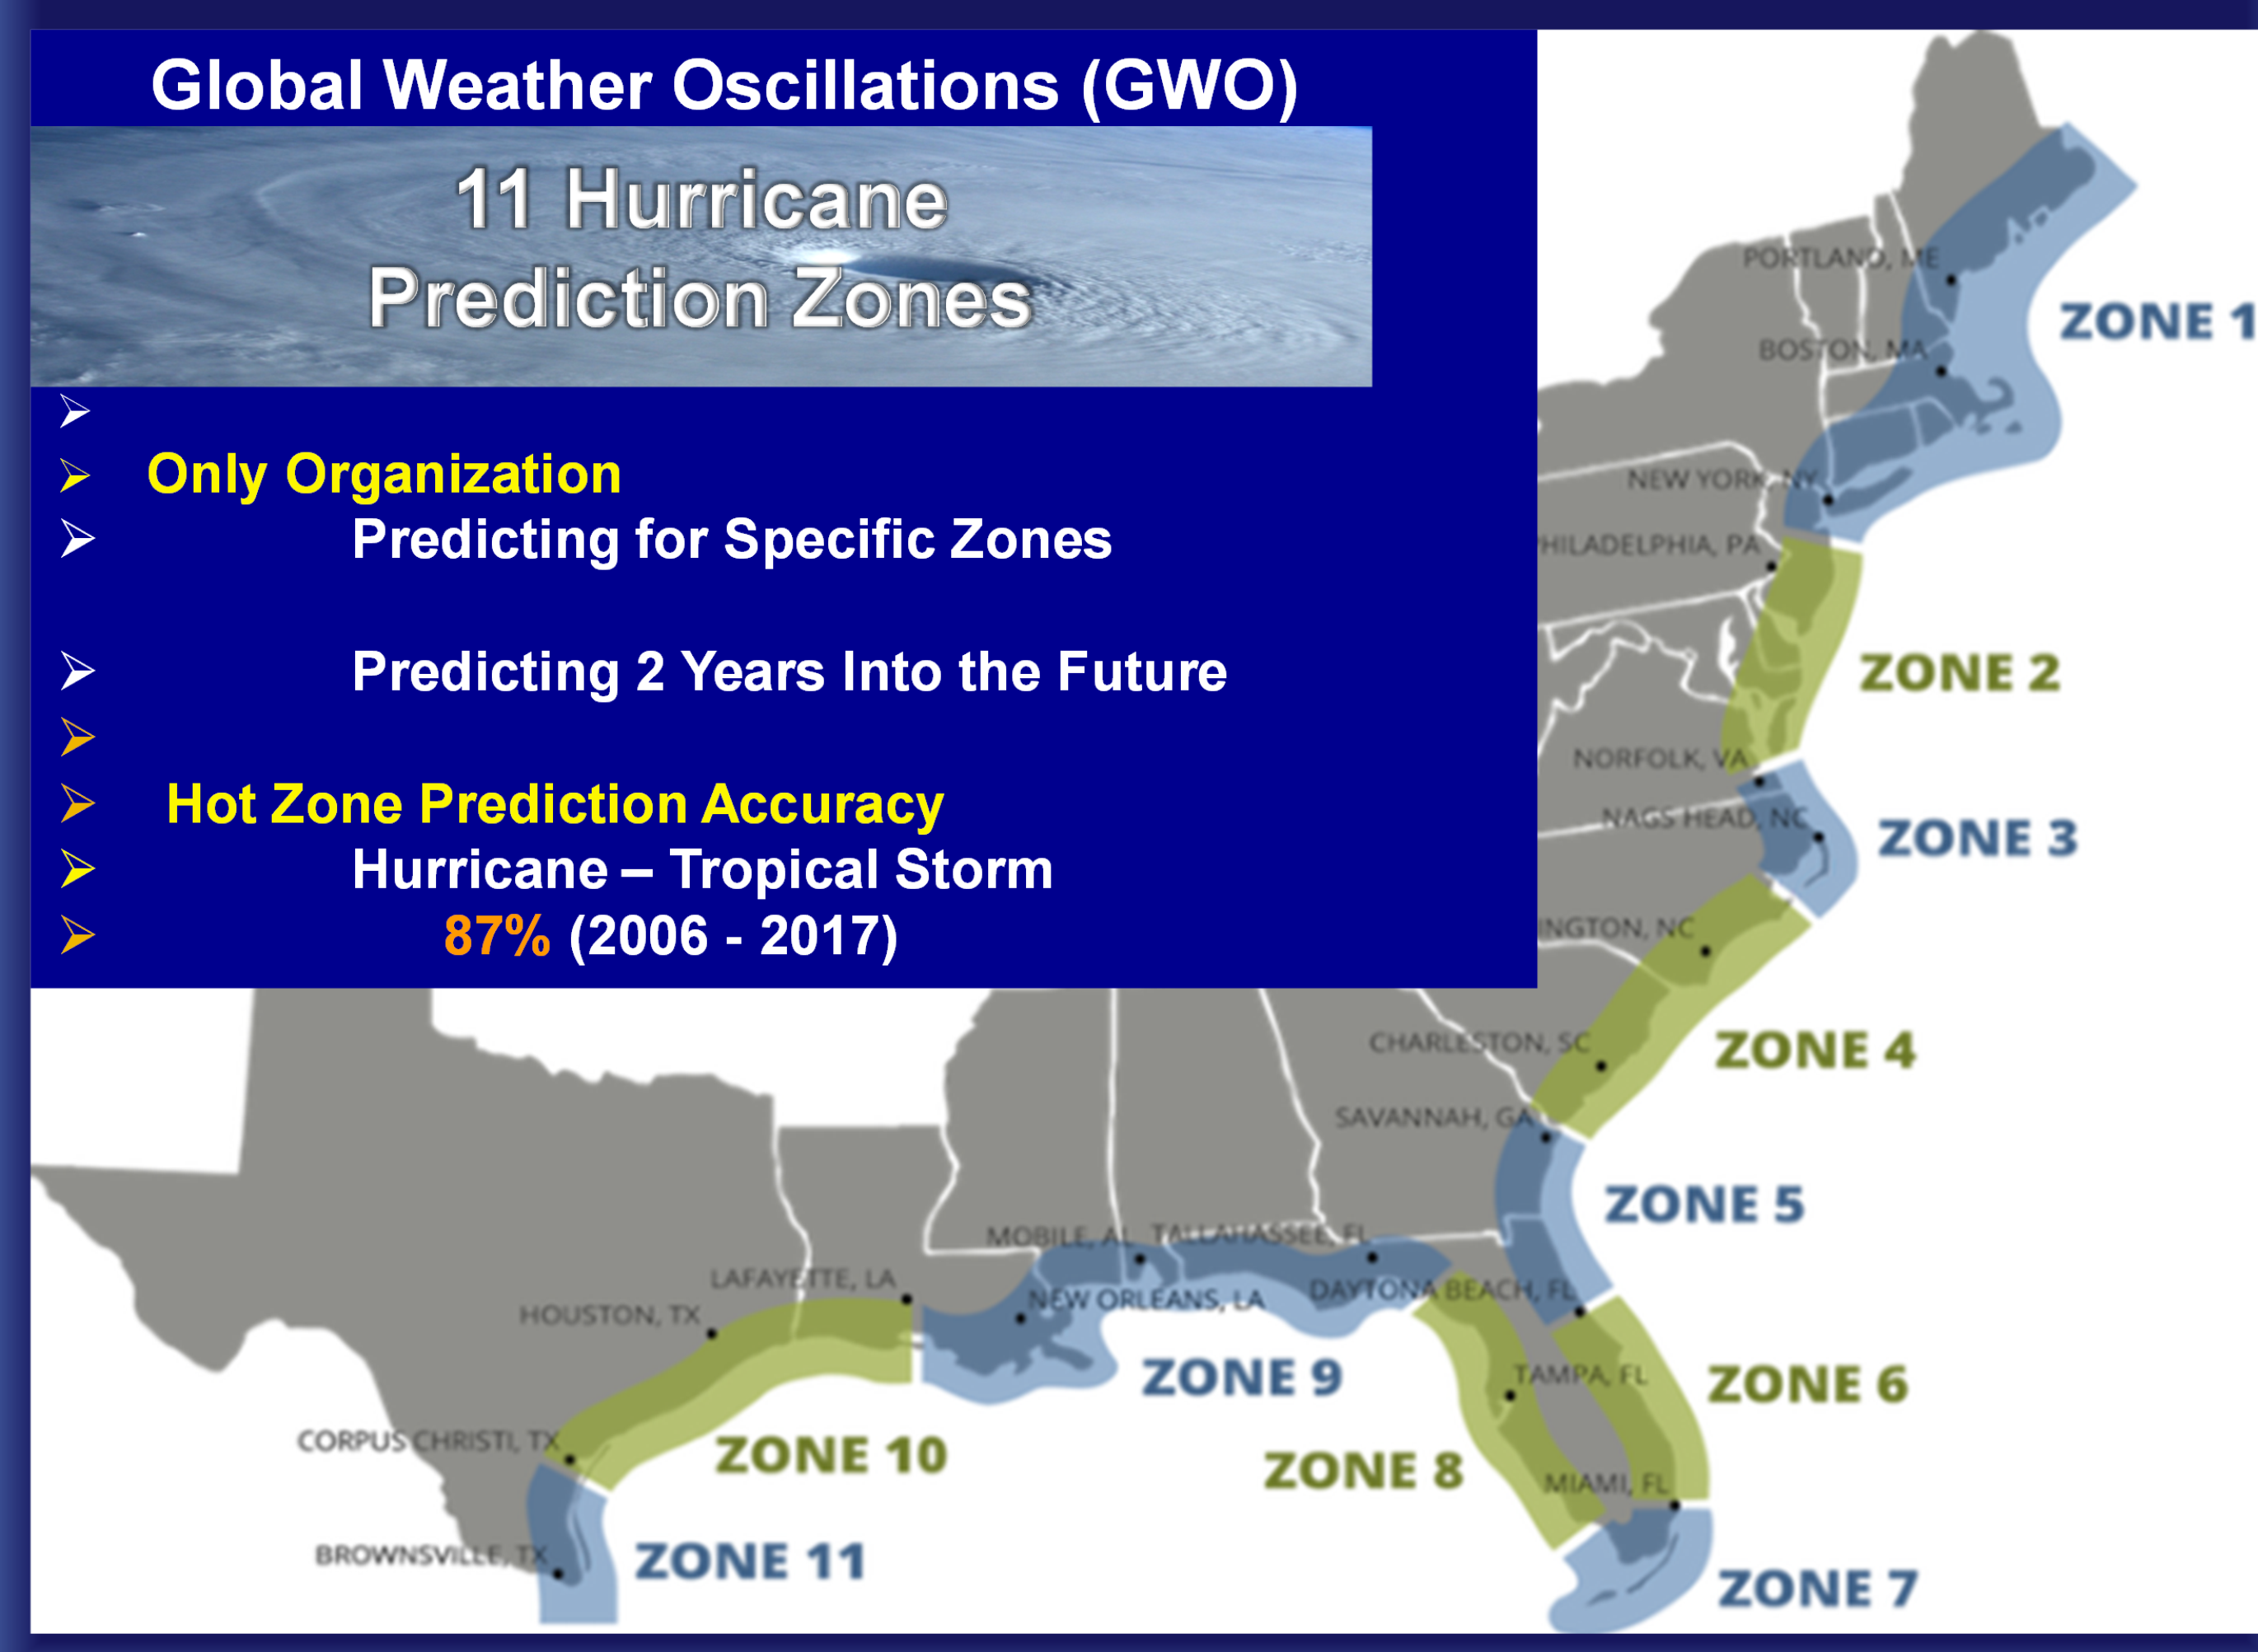 GWO"s Prediction Zones